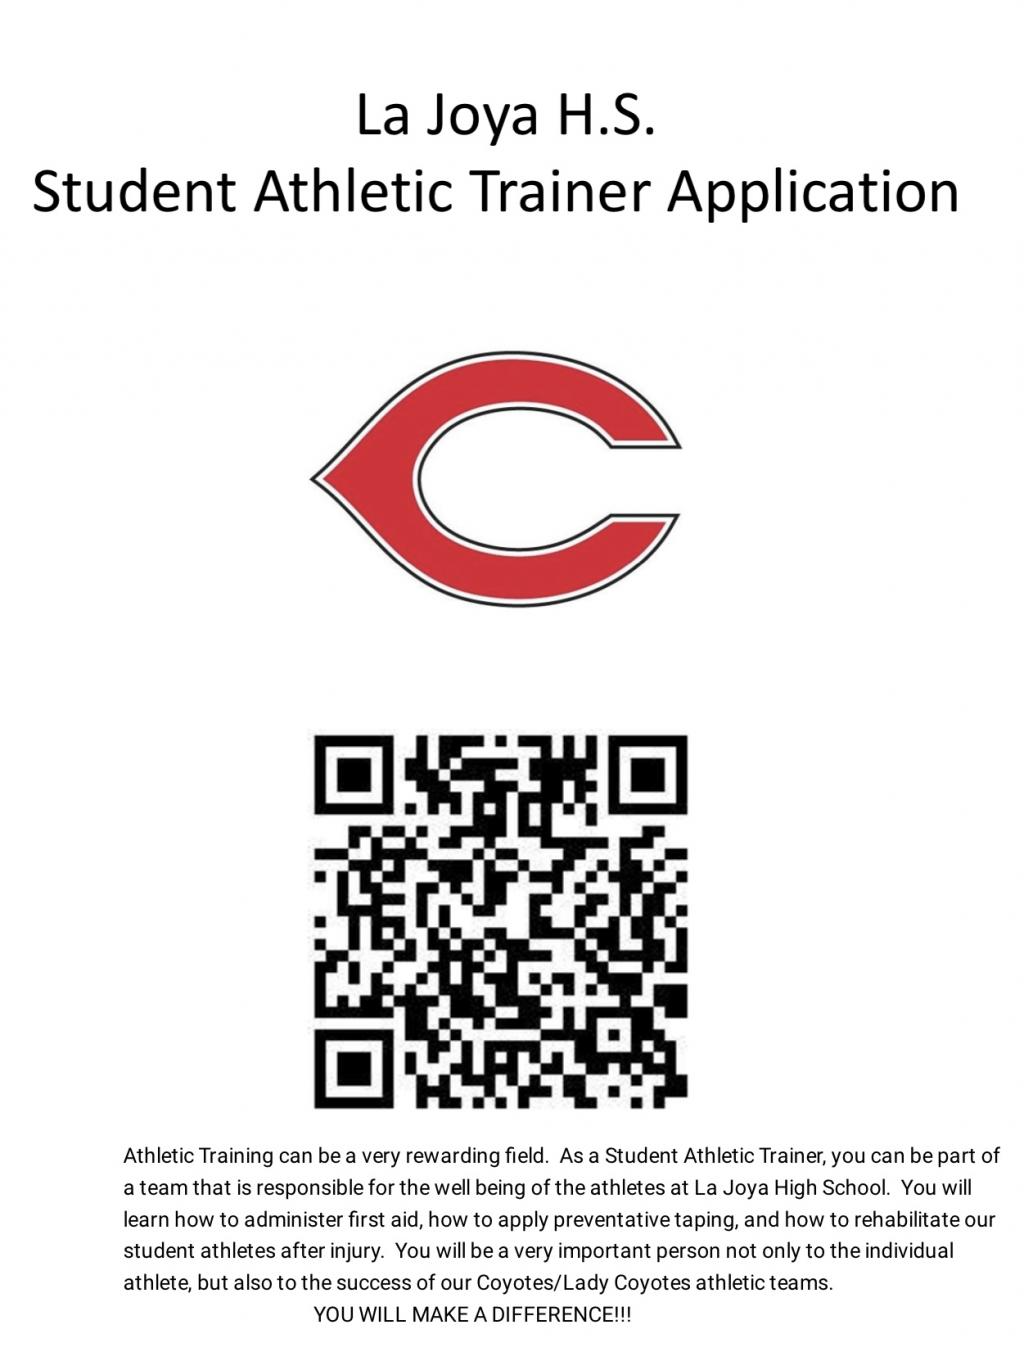 La Joya HS Student Athletic Trainer Application